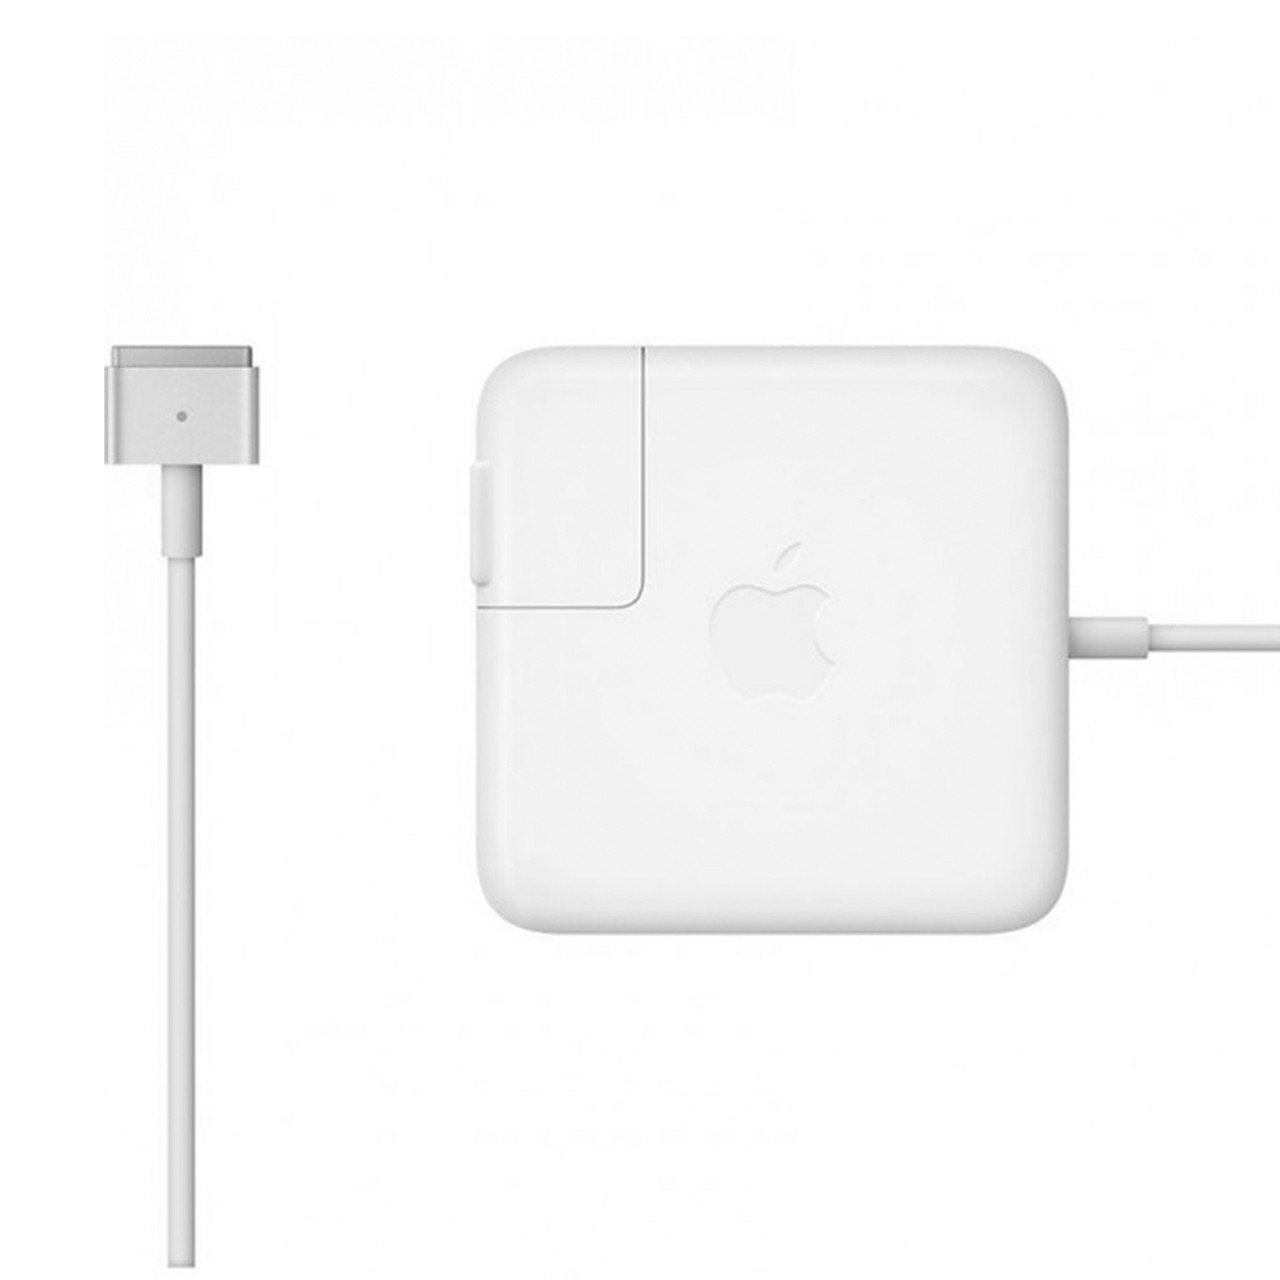 Блок питания Apple (A1424) 85W MagSafe 2 Power Adapter для MacBook Pro, White